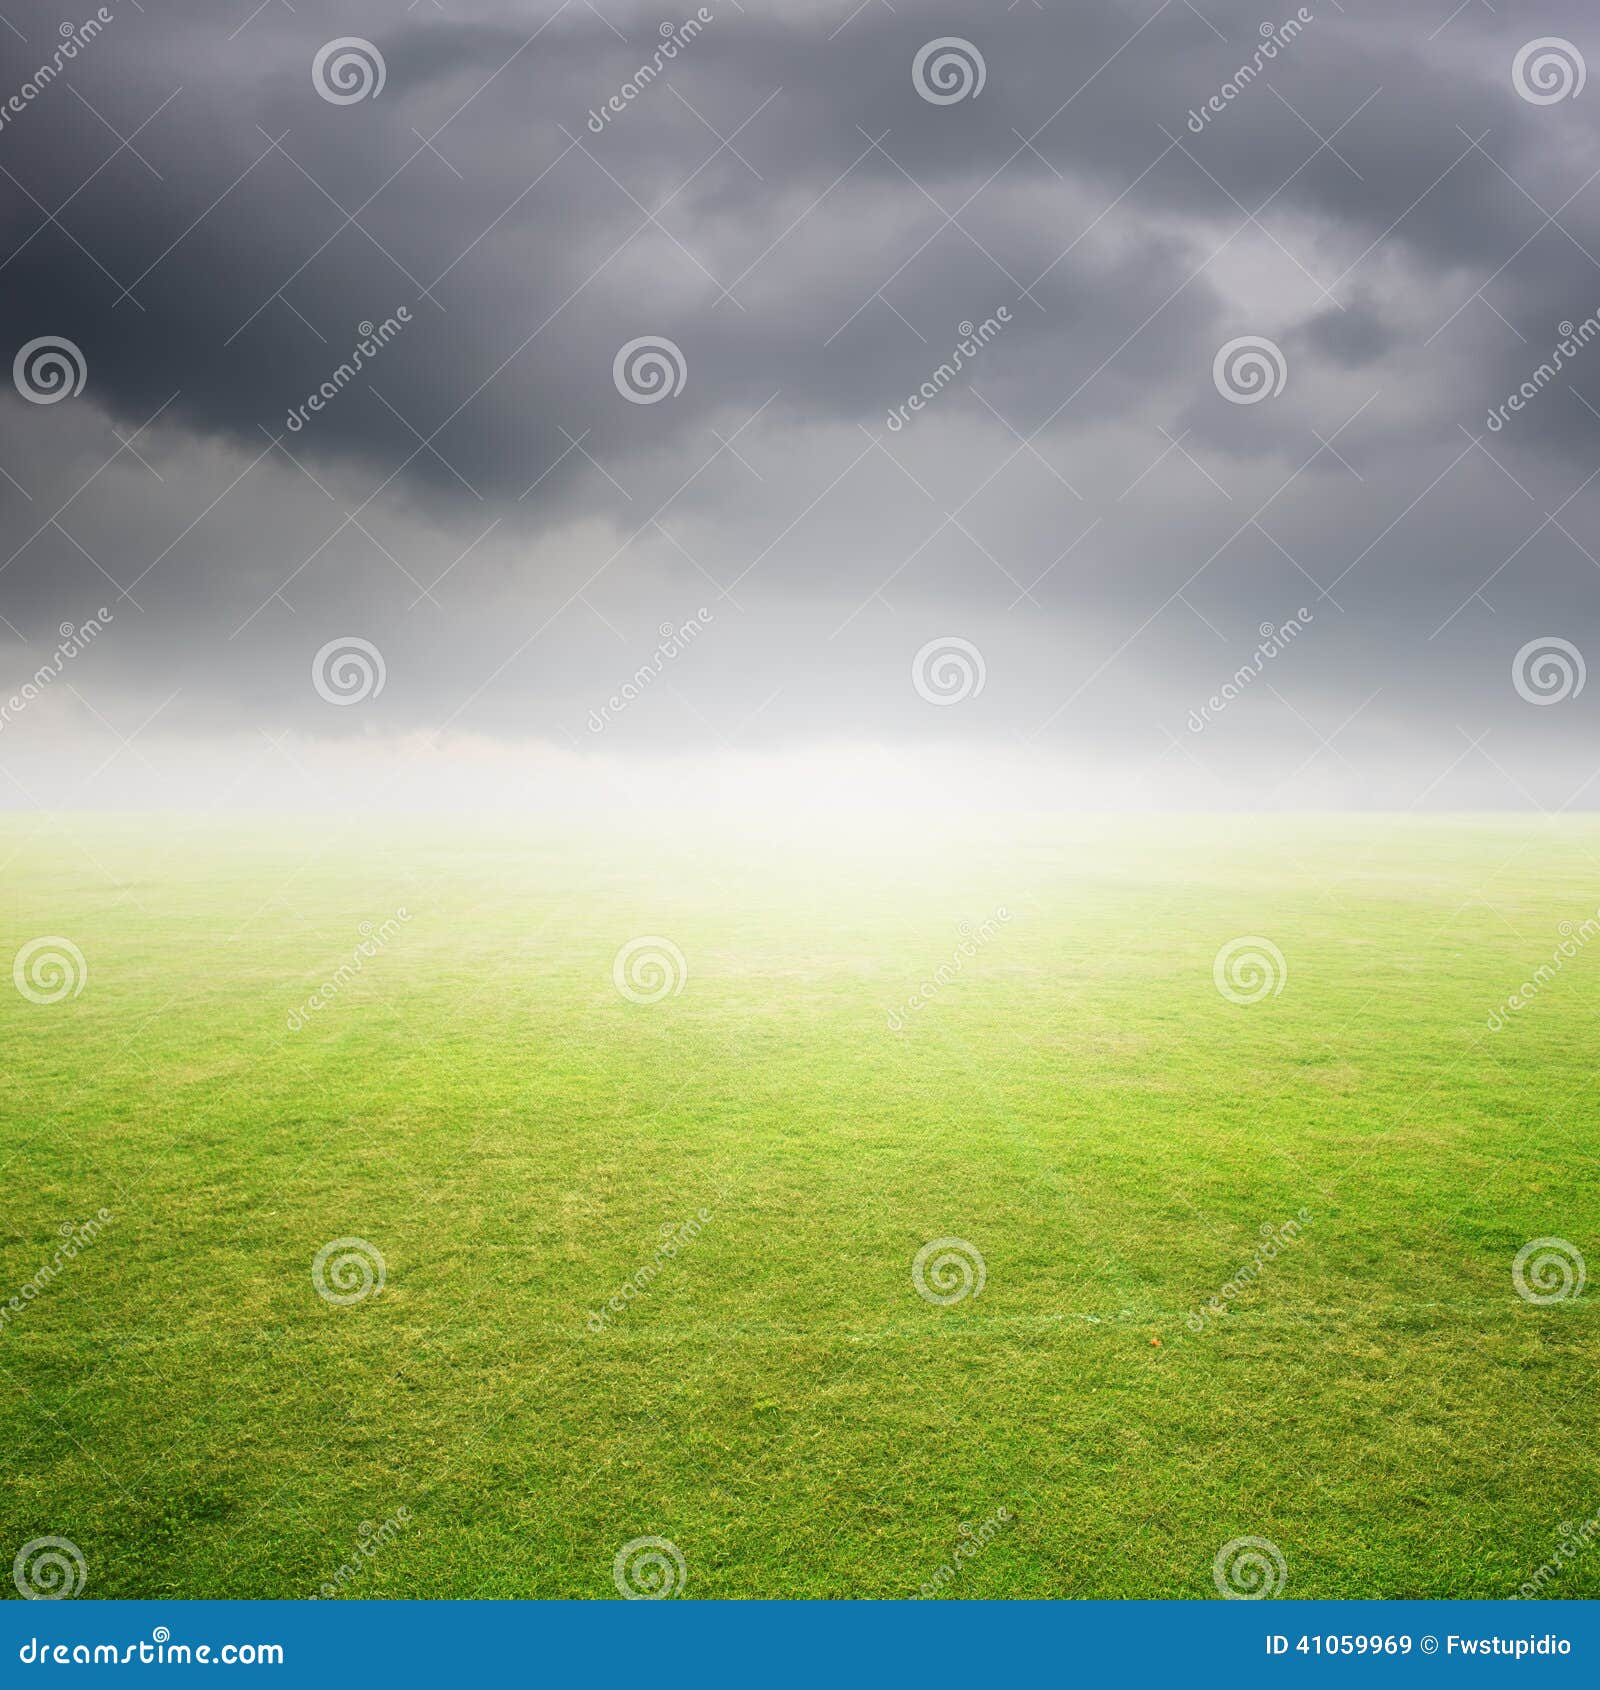 grass fields and beautiful rainclouds